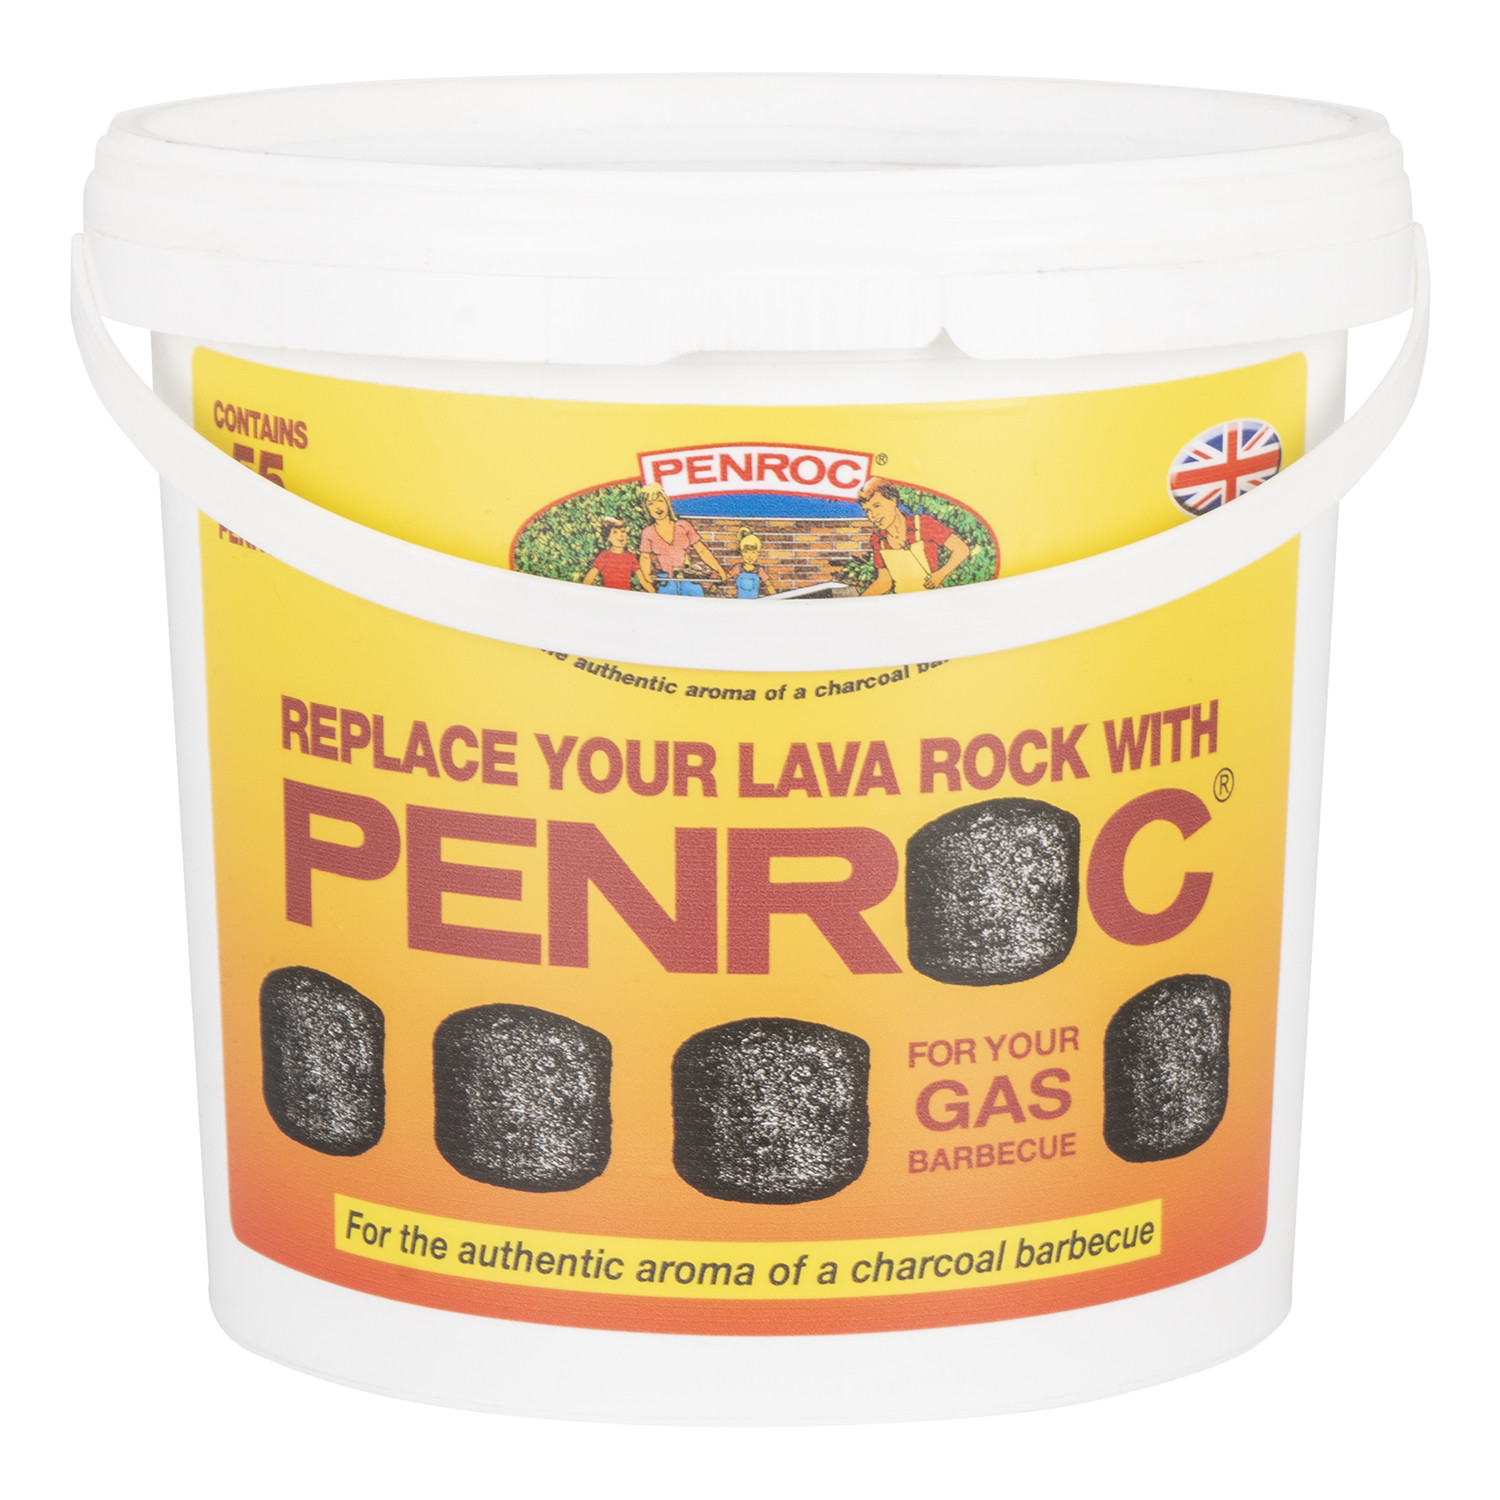 Penroc Lava Rock Replacement BBQ Fuel Image